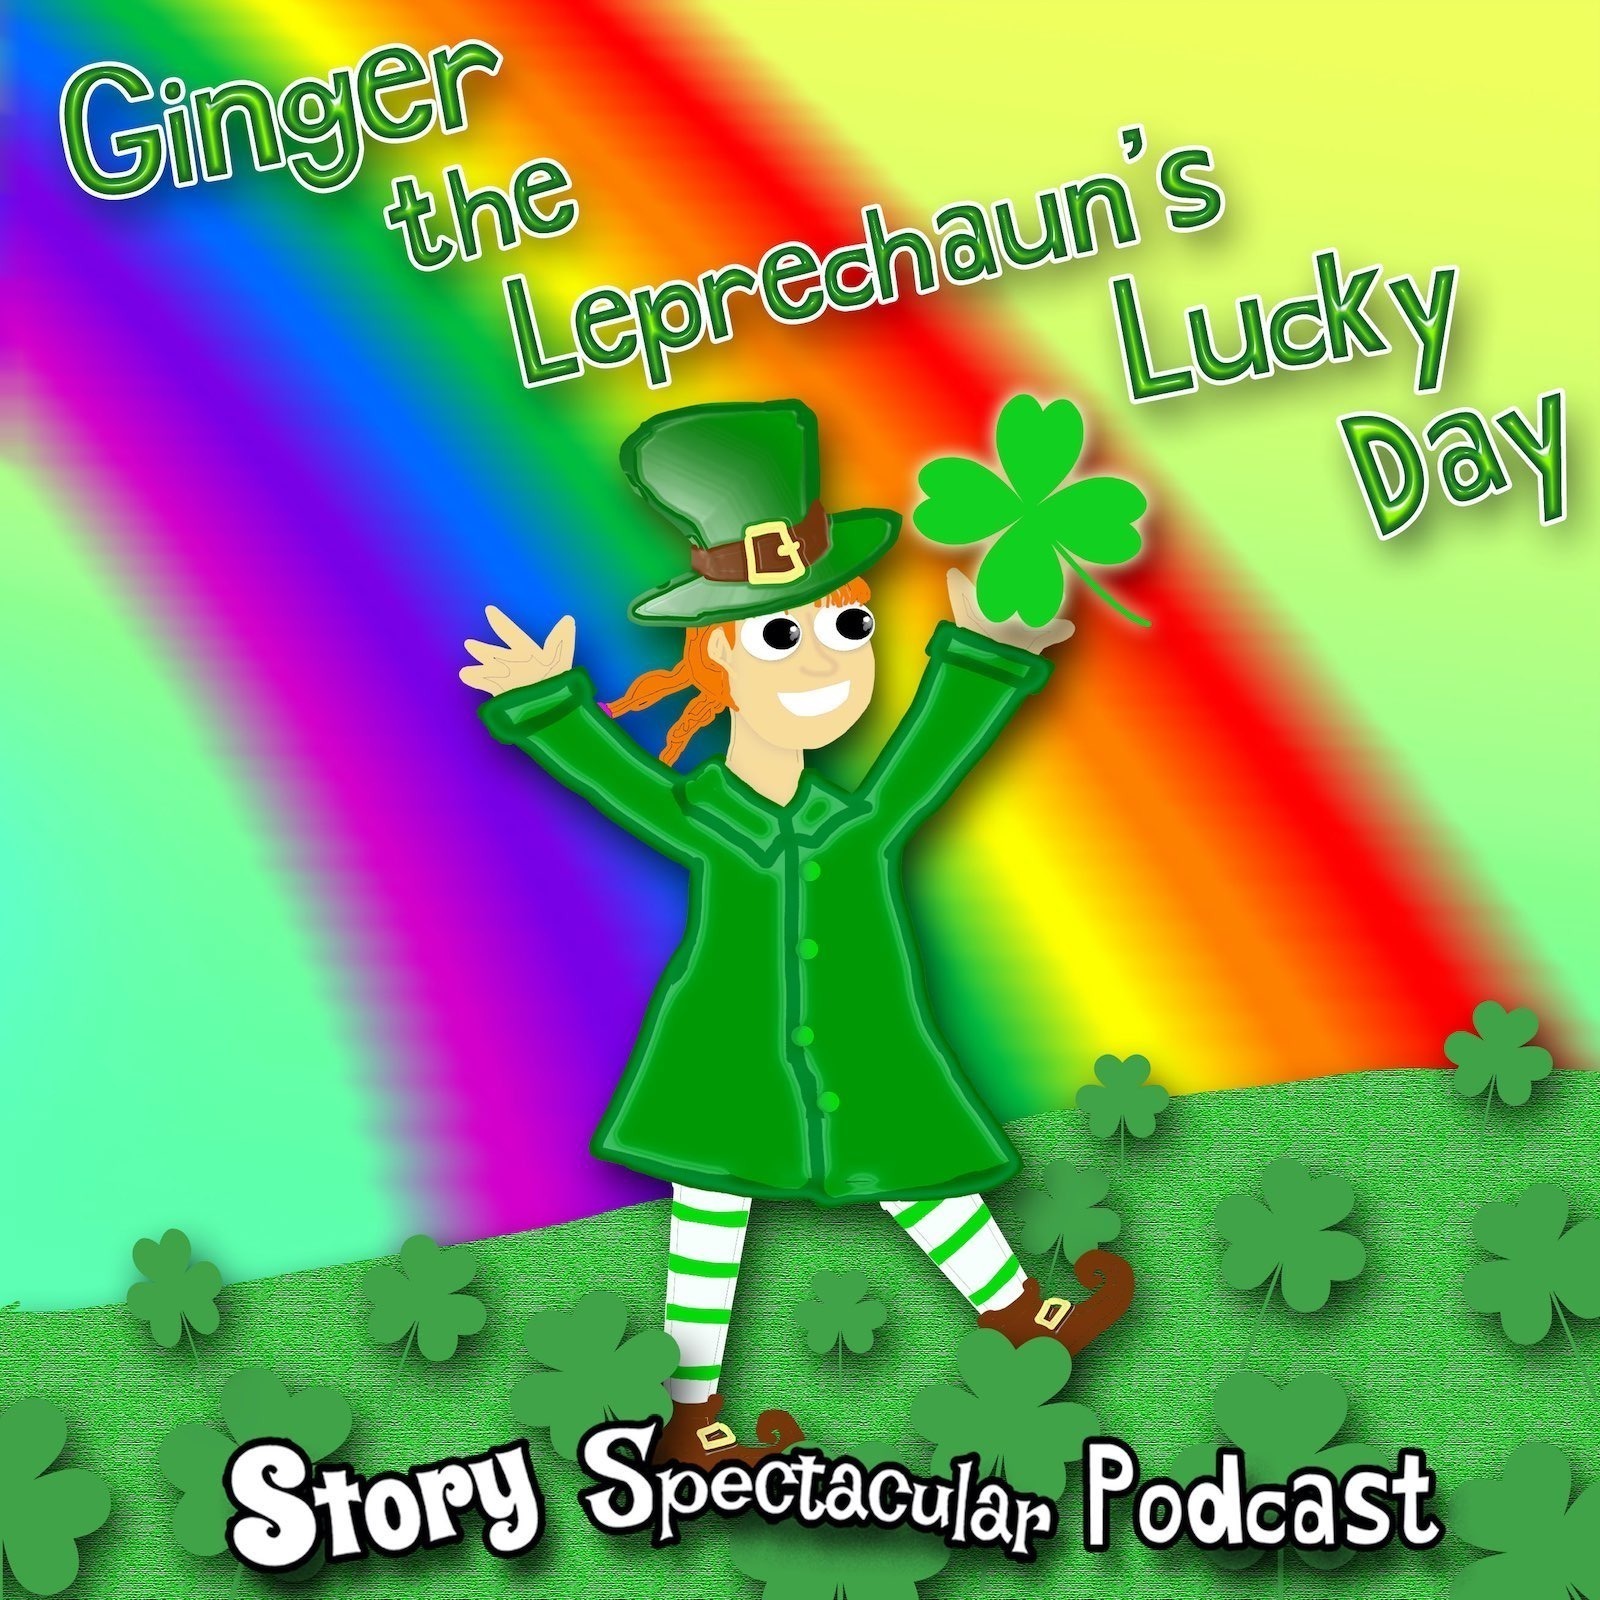 Ginger the Leprechaun’s Lucky Day